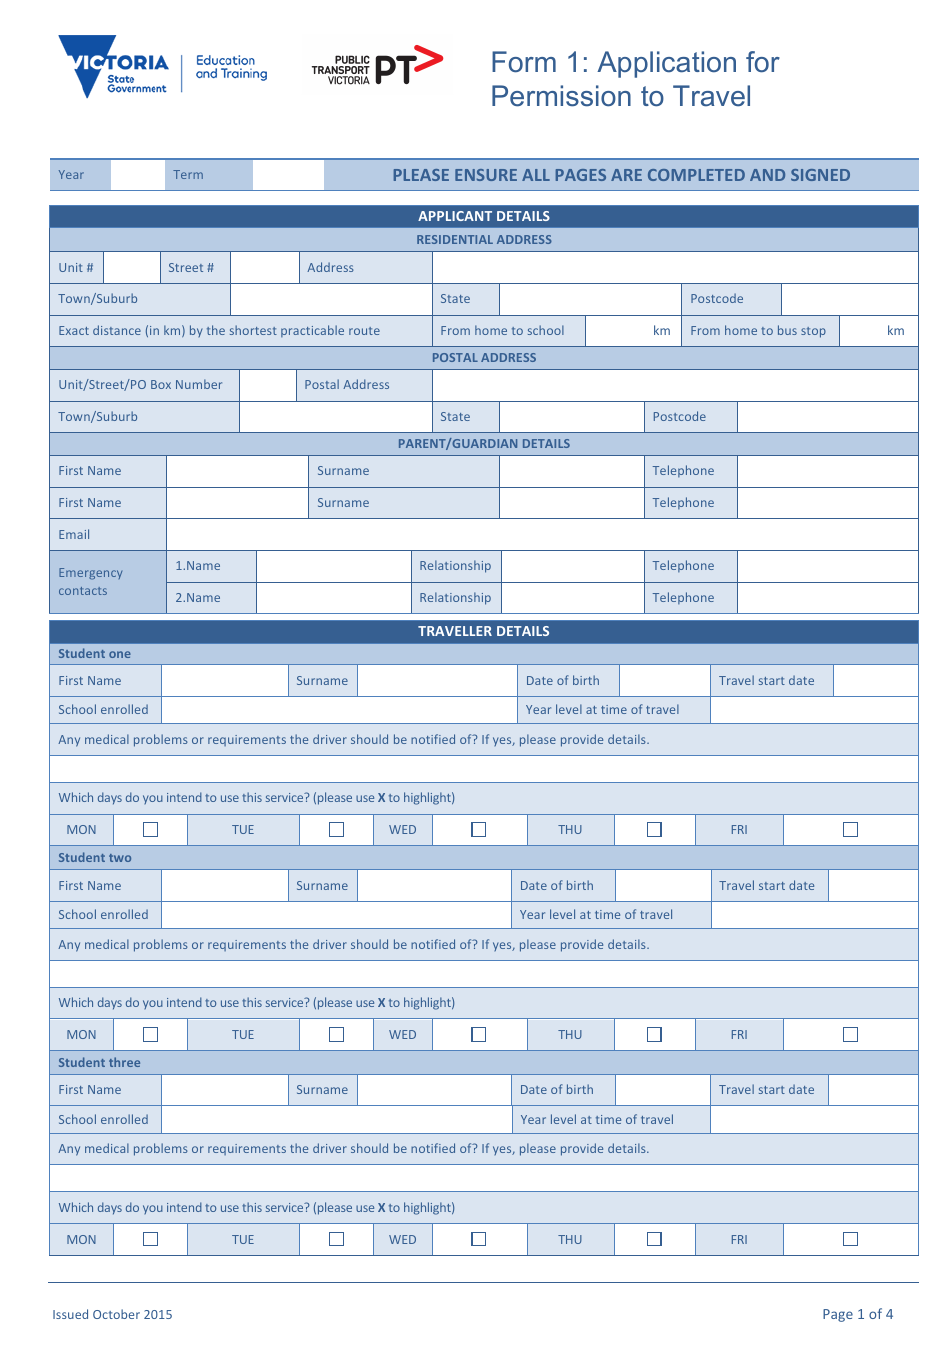 Application Form for Permission to Travel - Public Transport Victoria - Victoria, Australia, Page 1